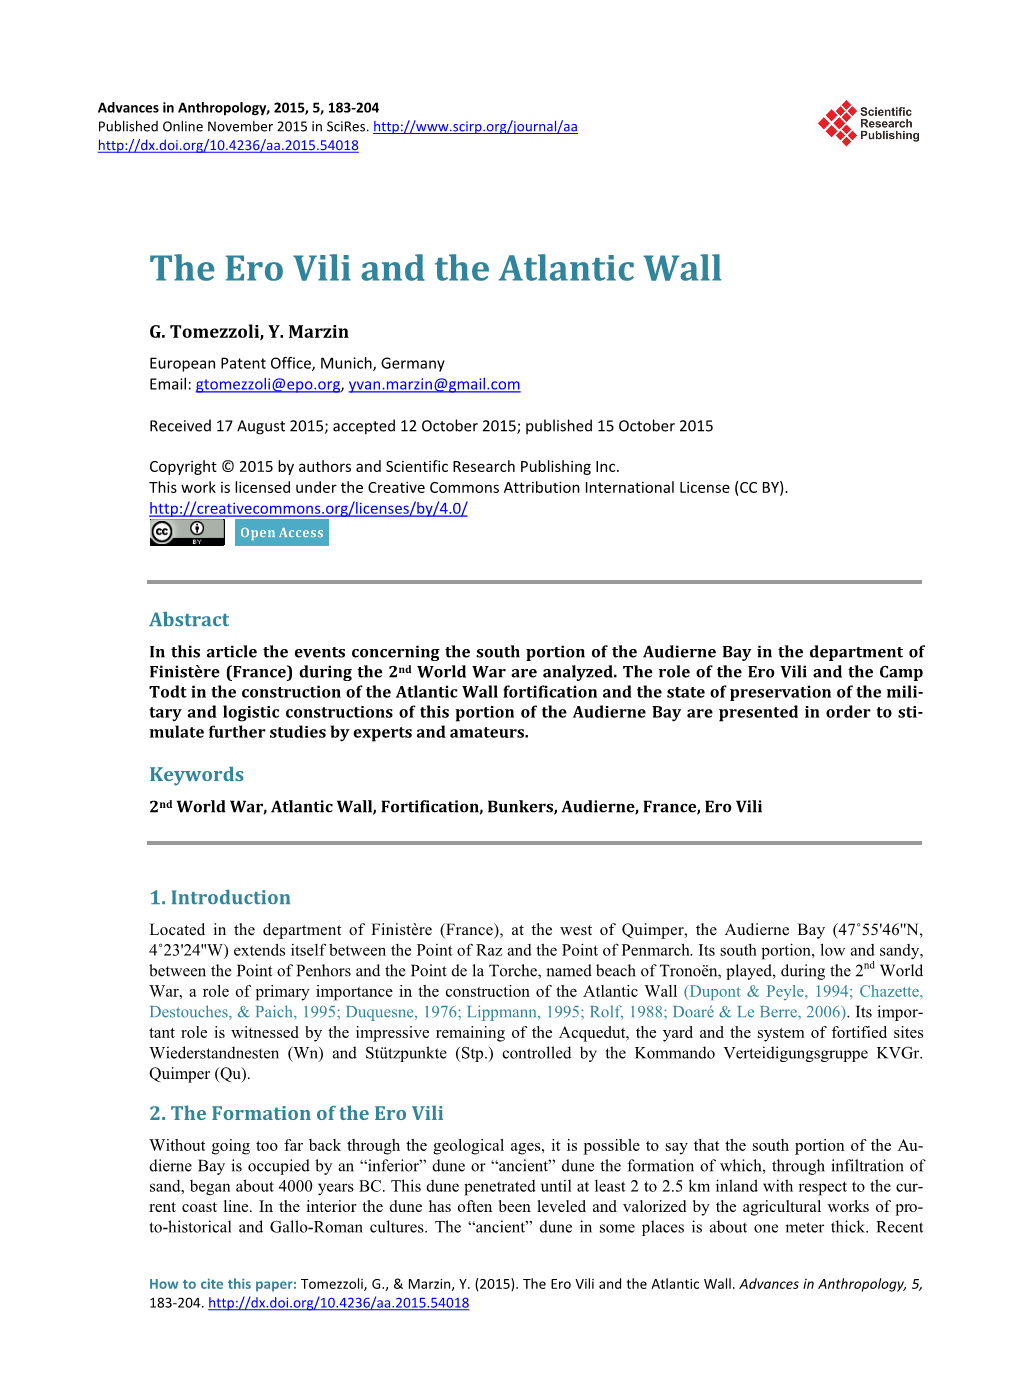 The Ero Vili and the Atlantic Wall